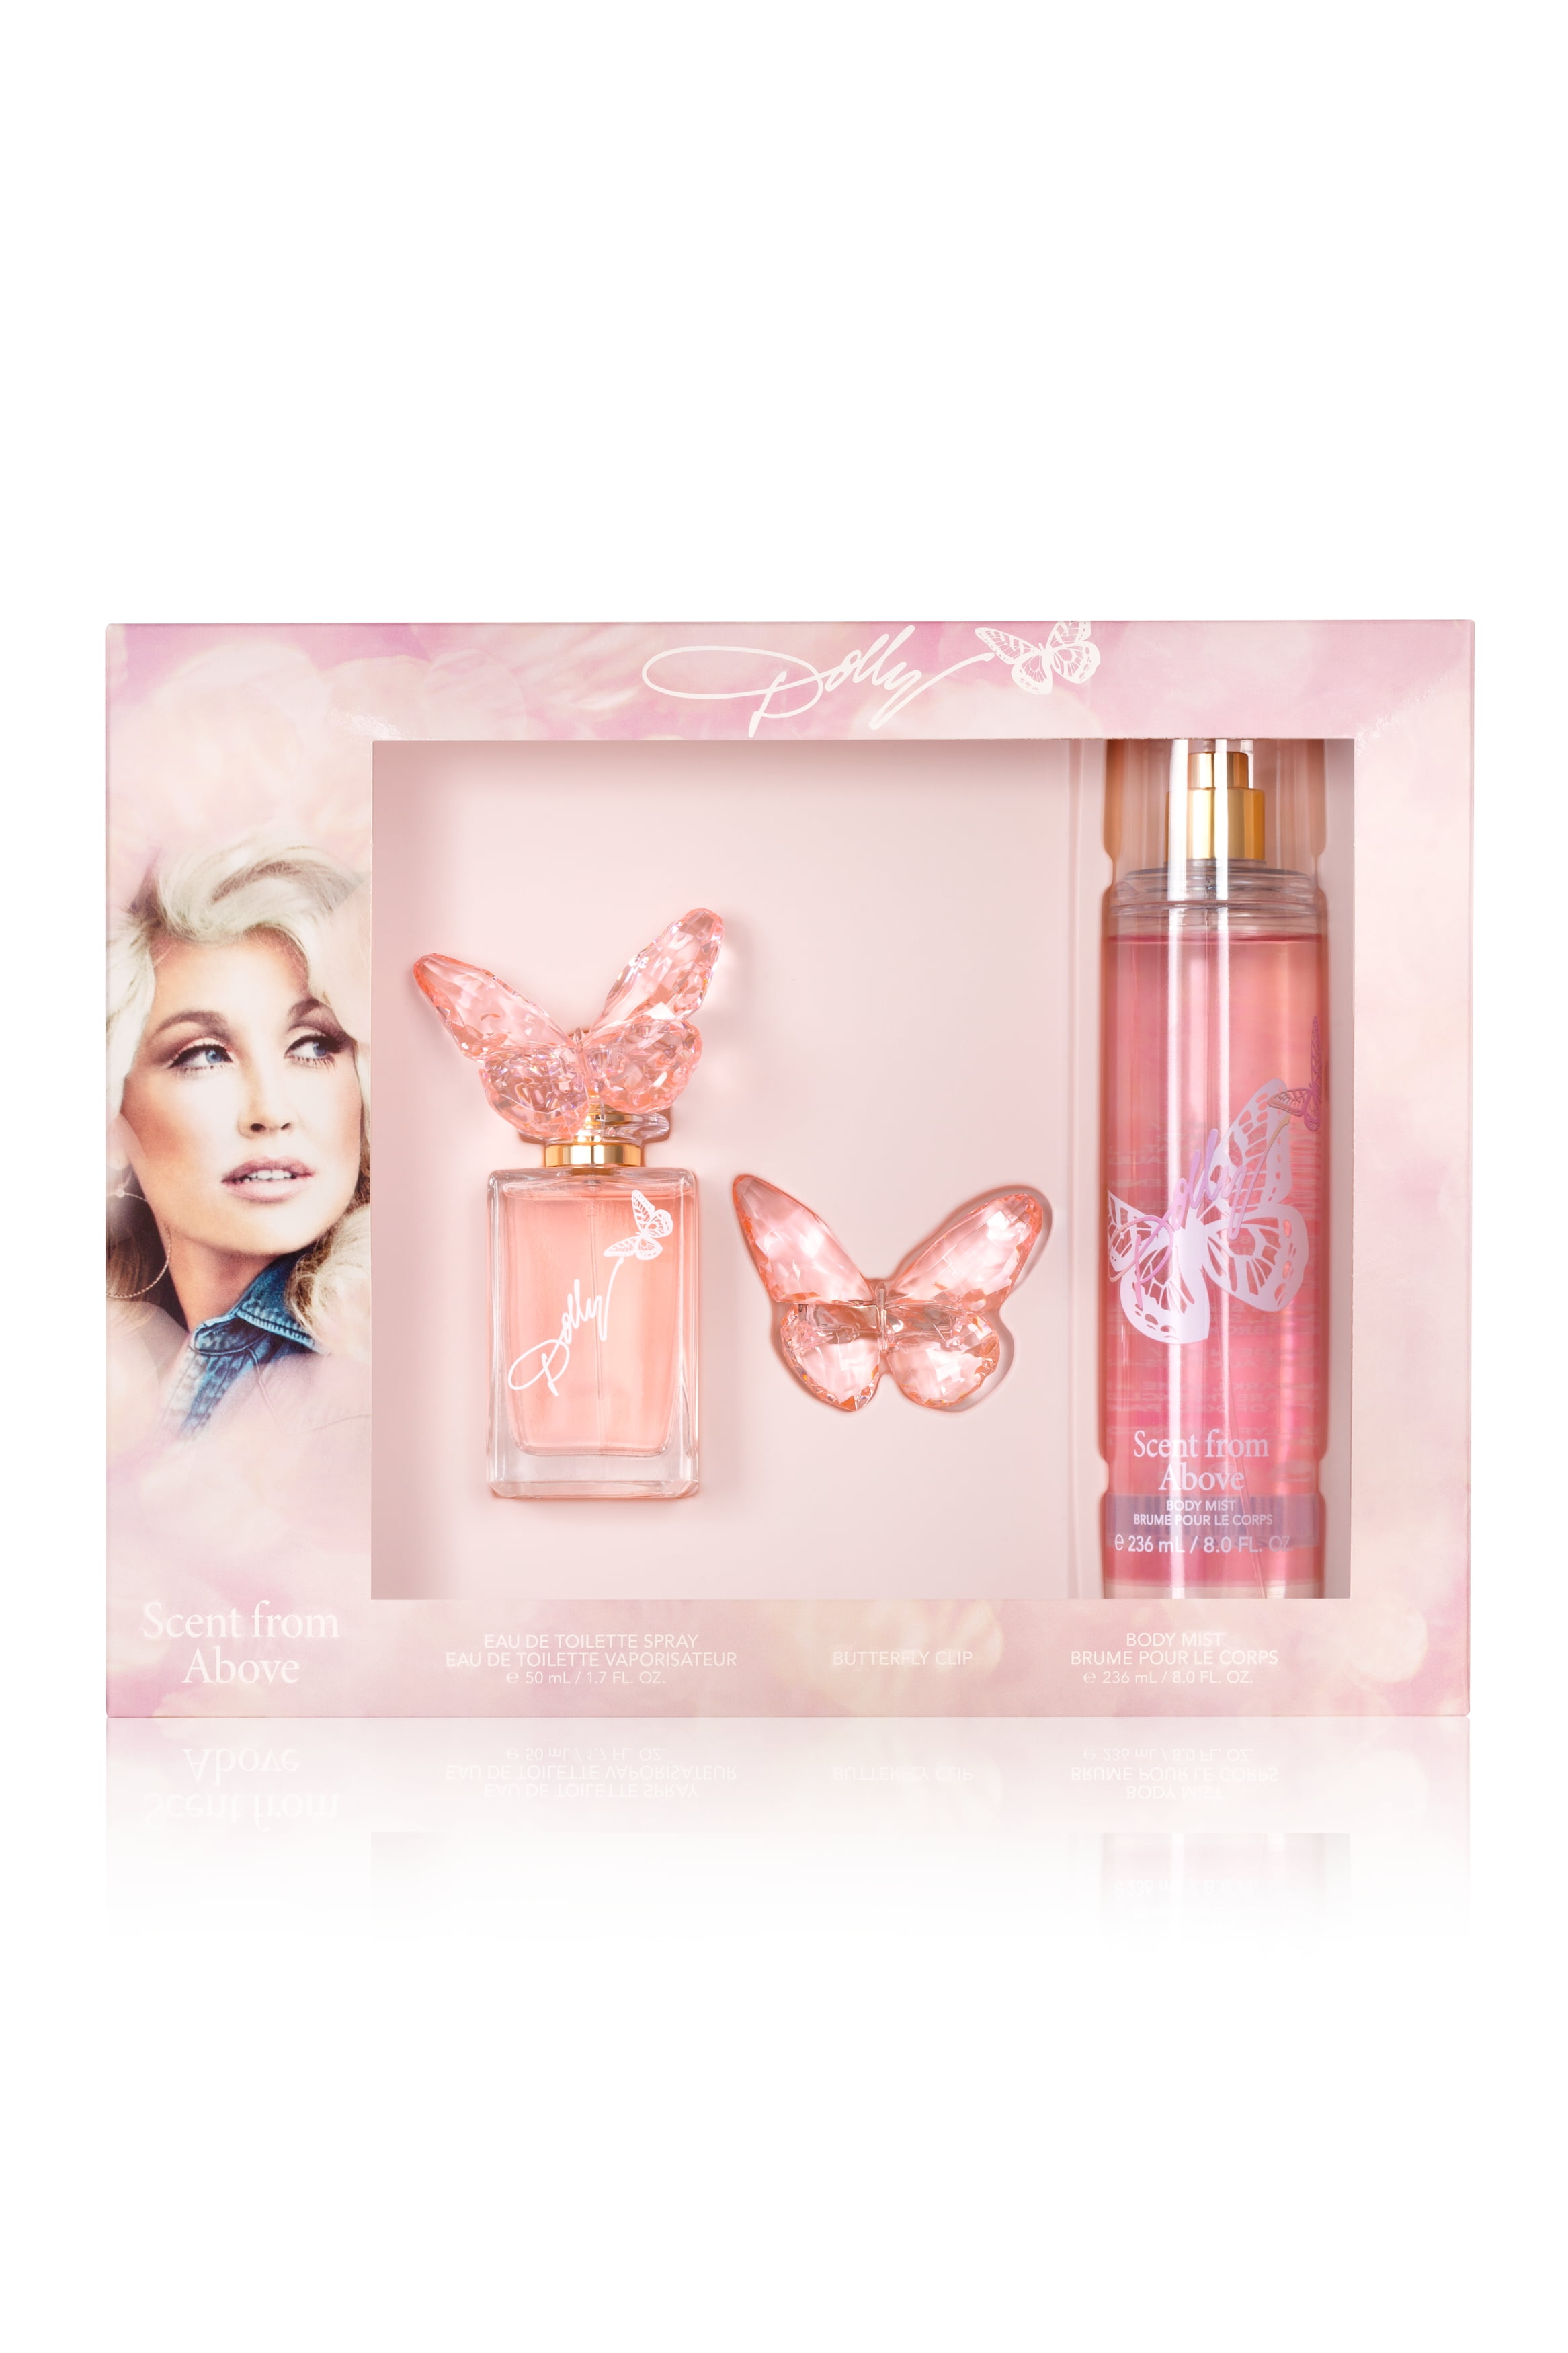 Dolly Parton Scent From Above 50ml Eau De Toilette Perfume, 8oz Body Mist & Butterfly Ornament Gift Set